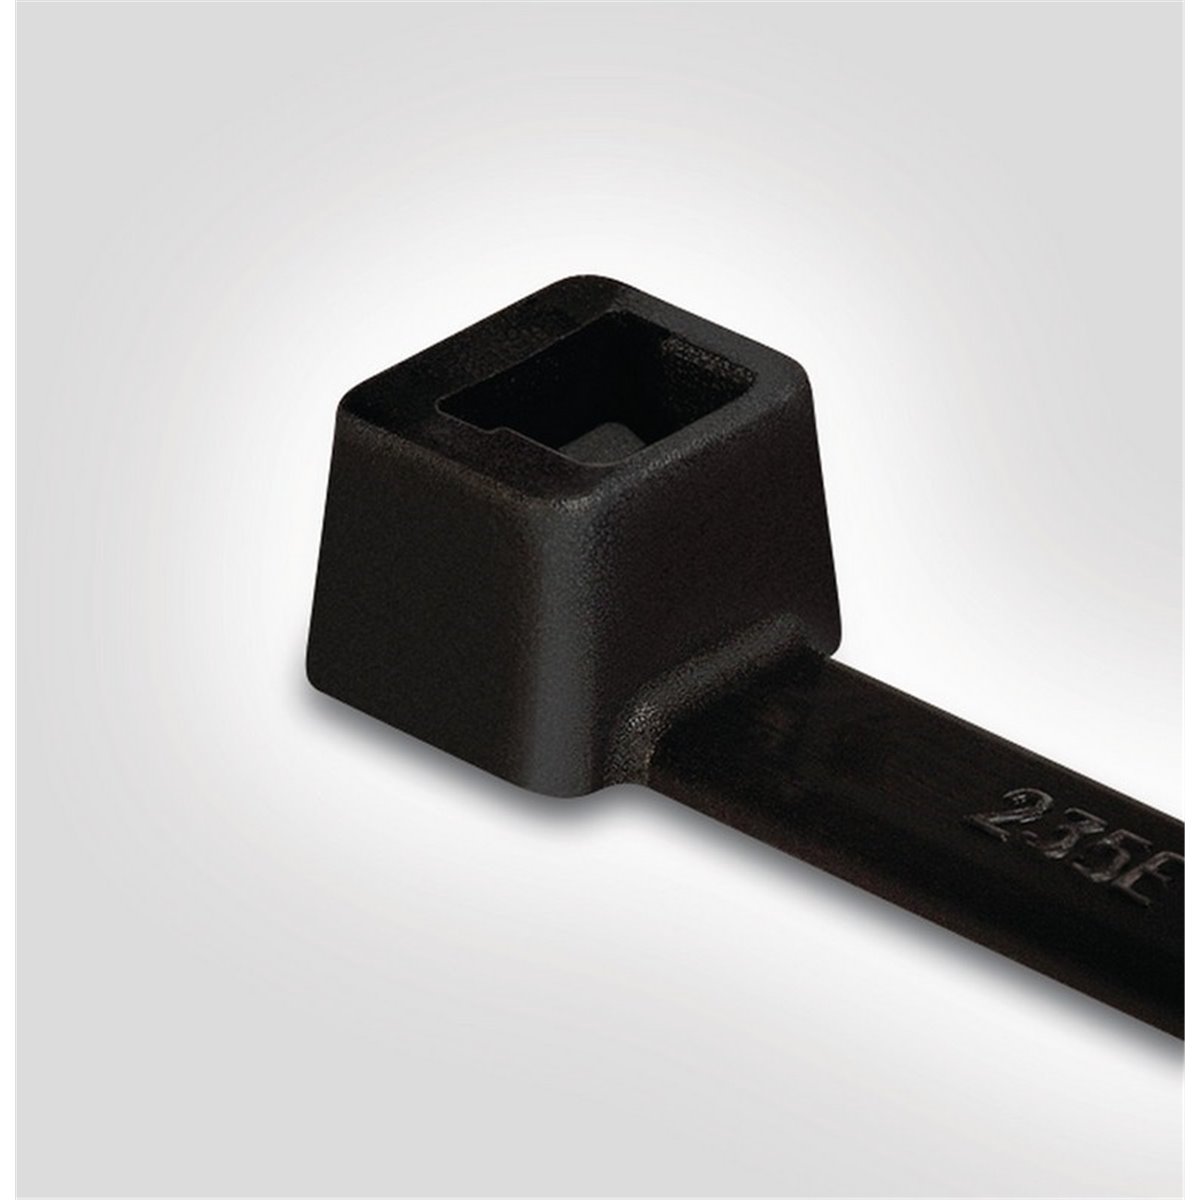 Cable tie T50I-PA66HIR(S)-BK, 4.6x300mm, black, 100 pcs. HellermannTyton